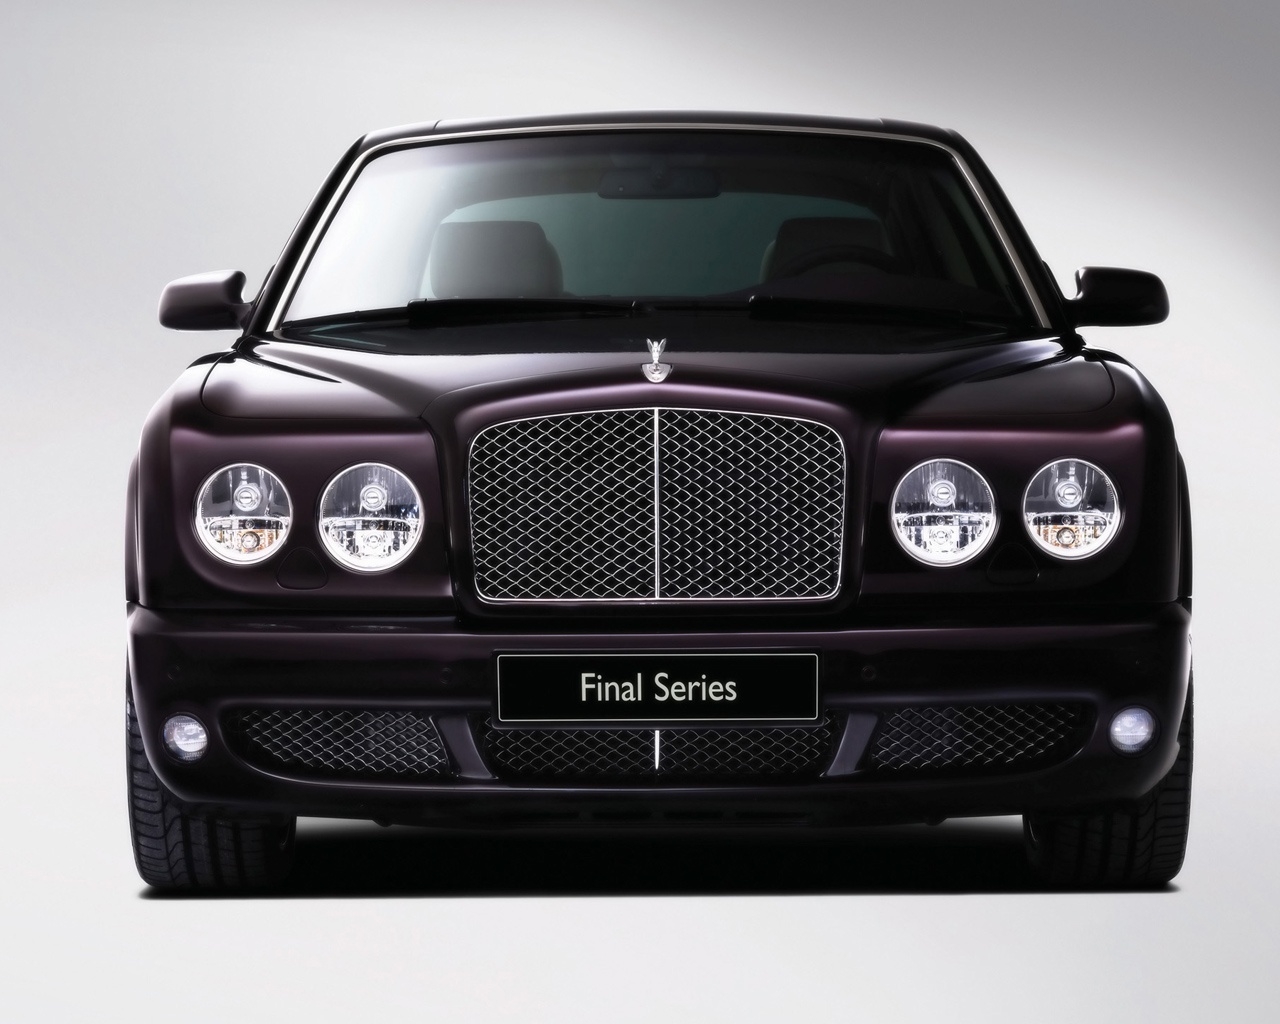 Bentley Arnage Final Series 2009 for 1280 x 1024 resolution